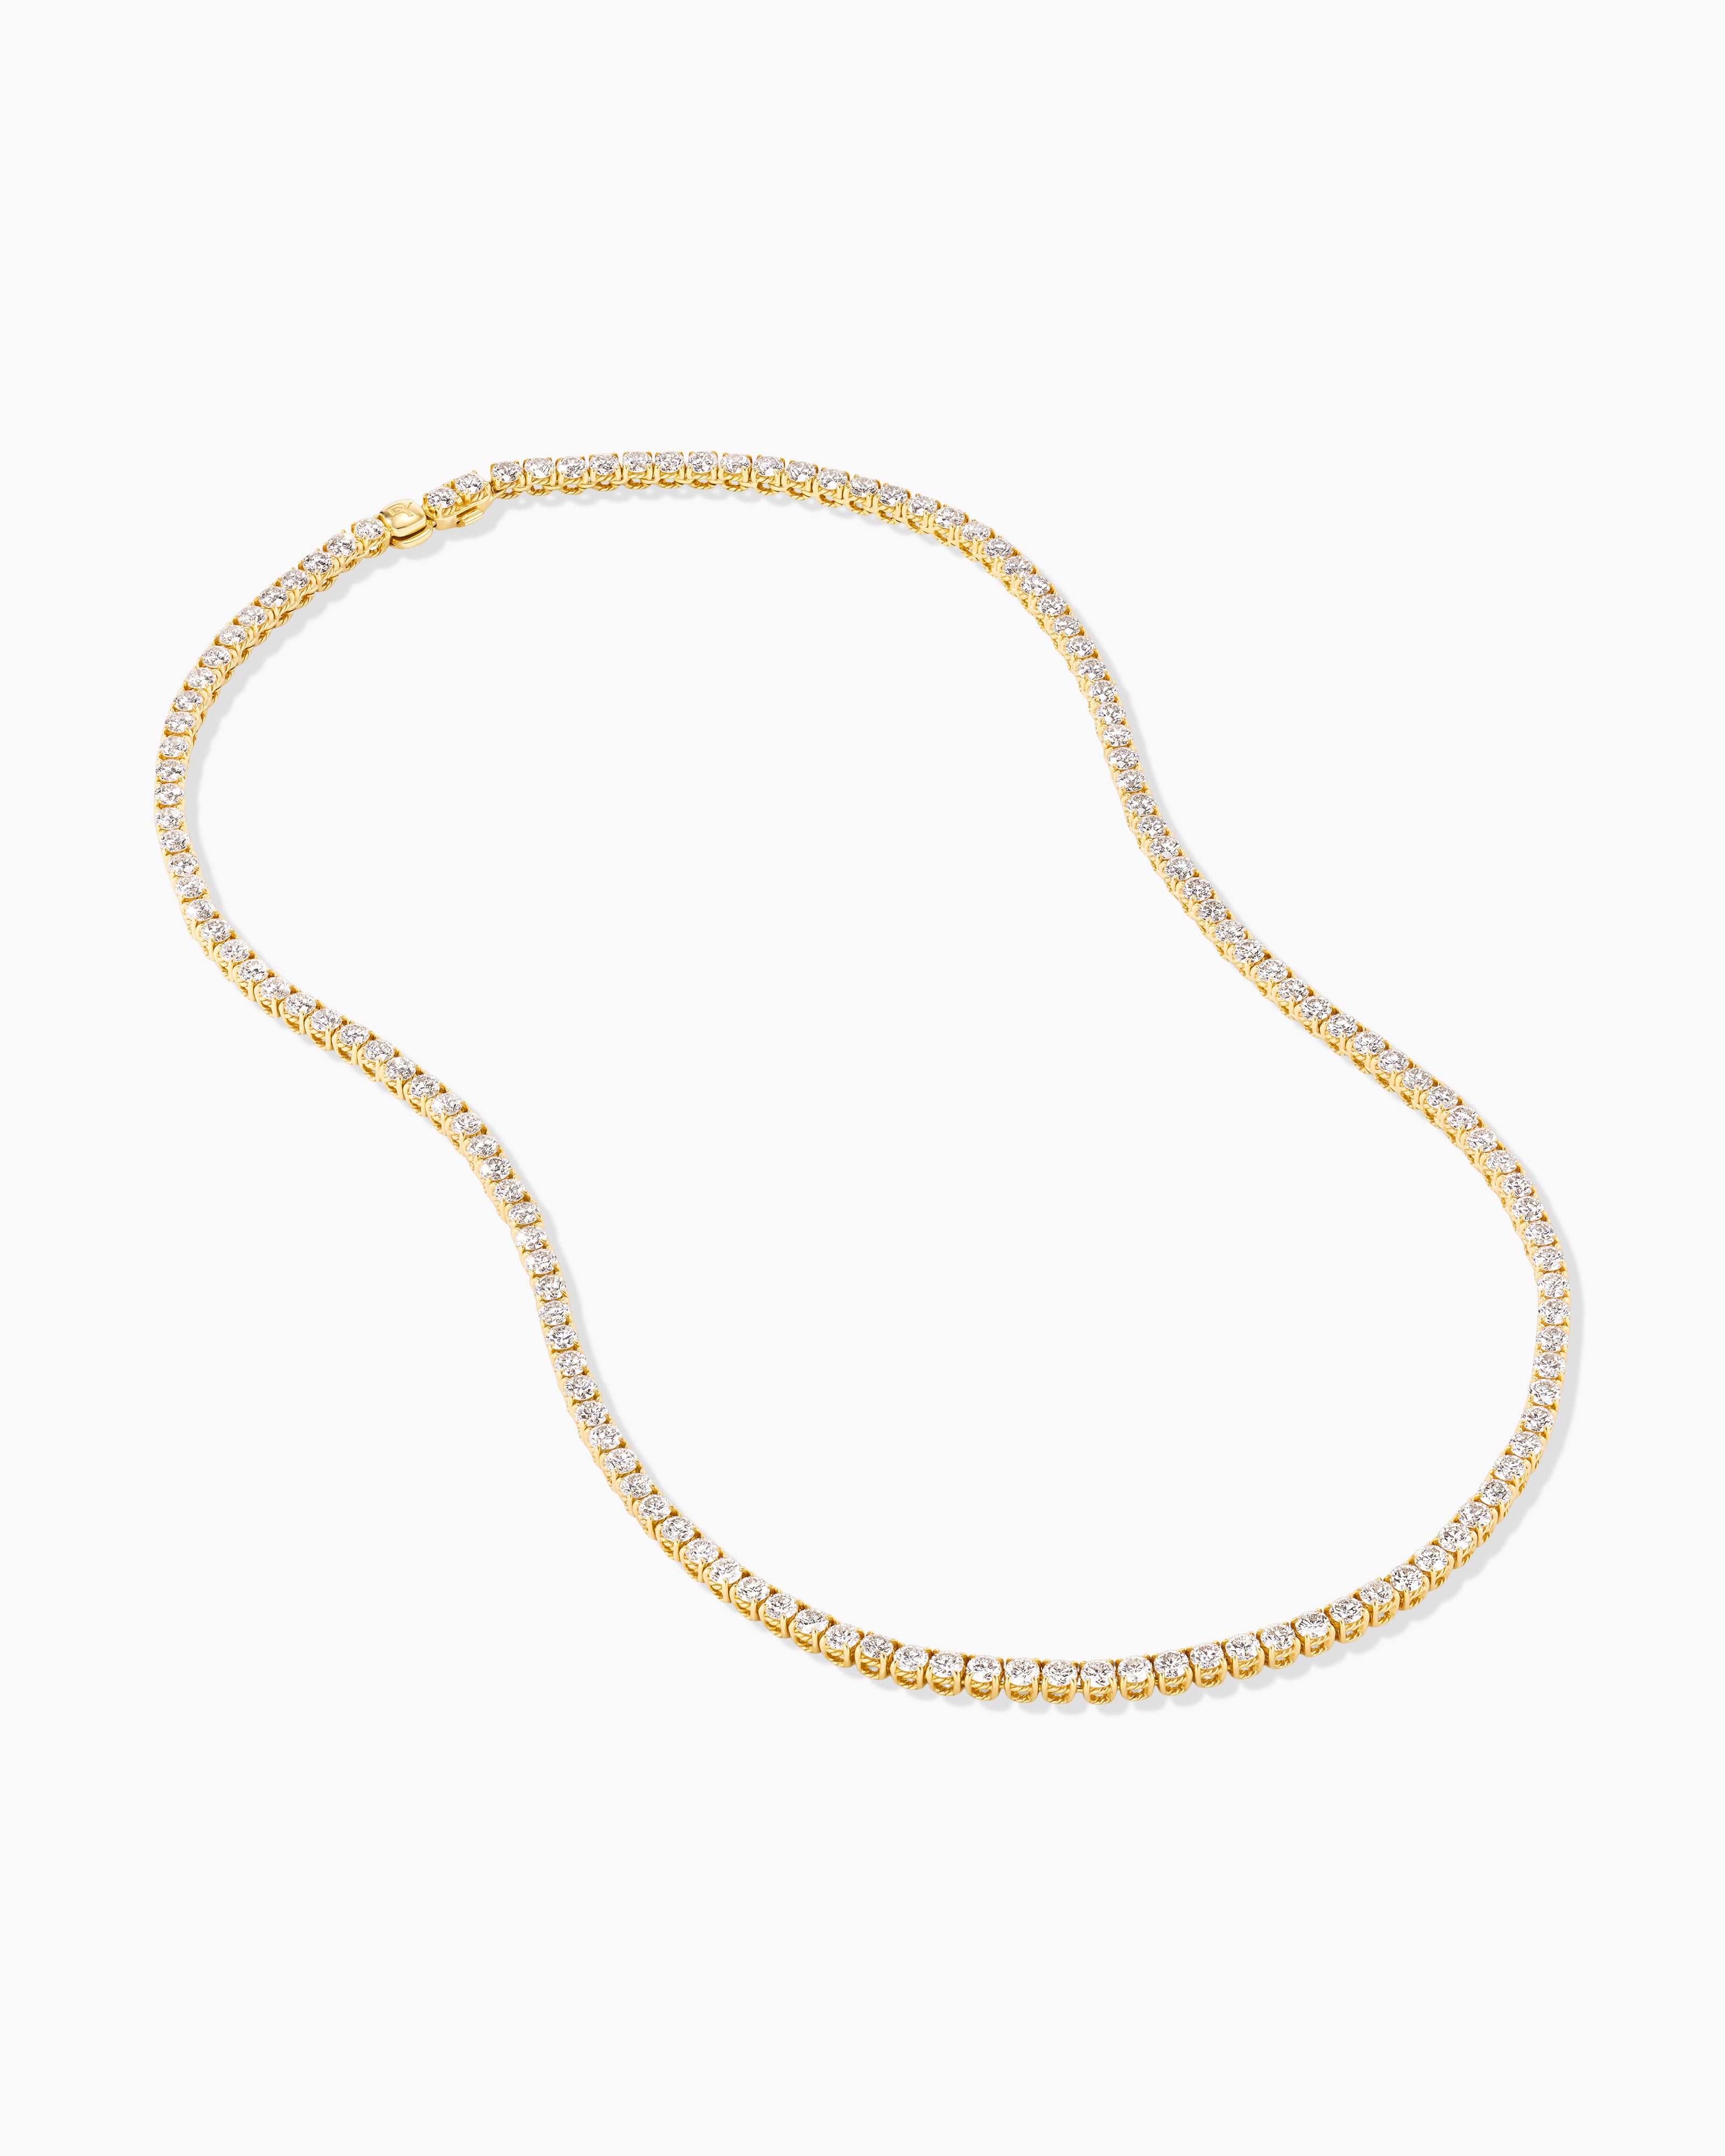 Gold Plated Tennis Chain Unisex necklace/bracelet 2.5mm/3mm/4mm/5mm | eBay